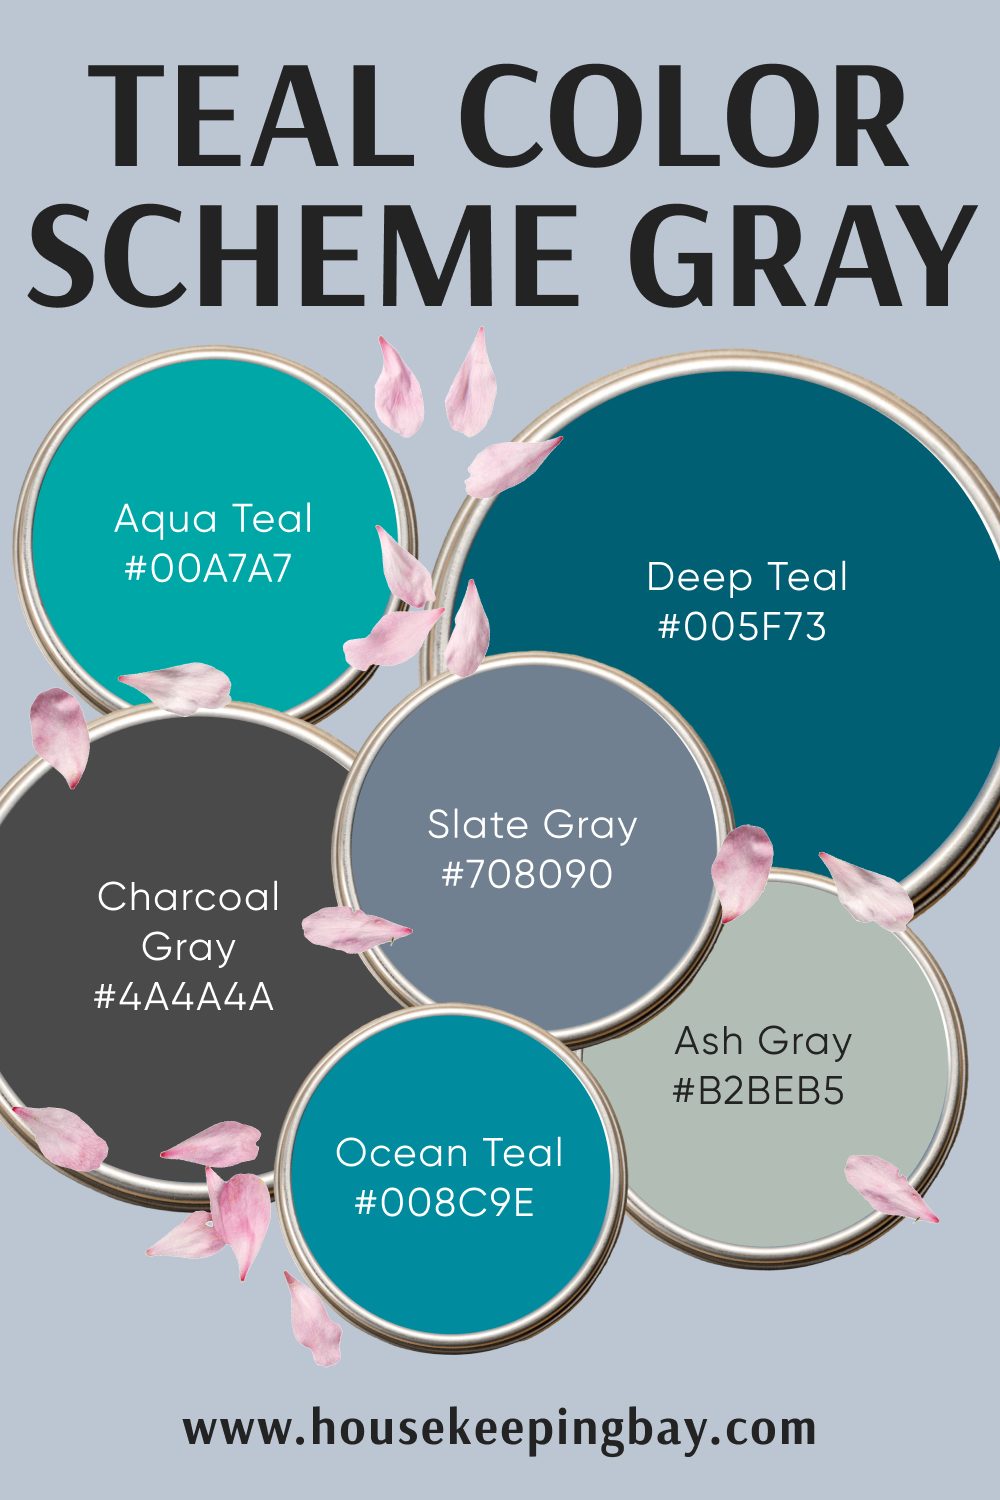 Teal Color Scheme Gray